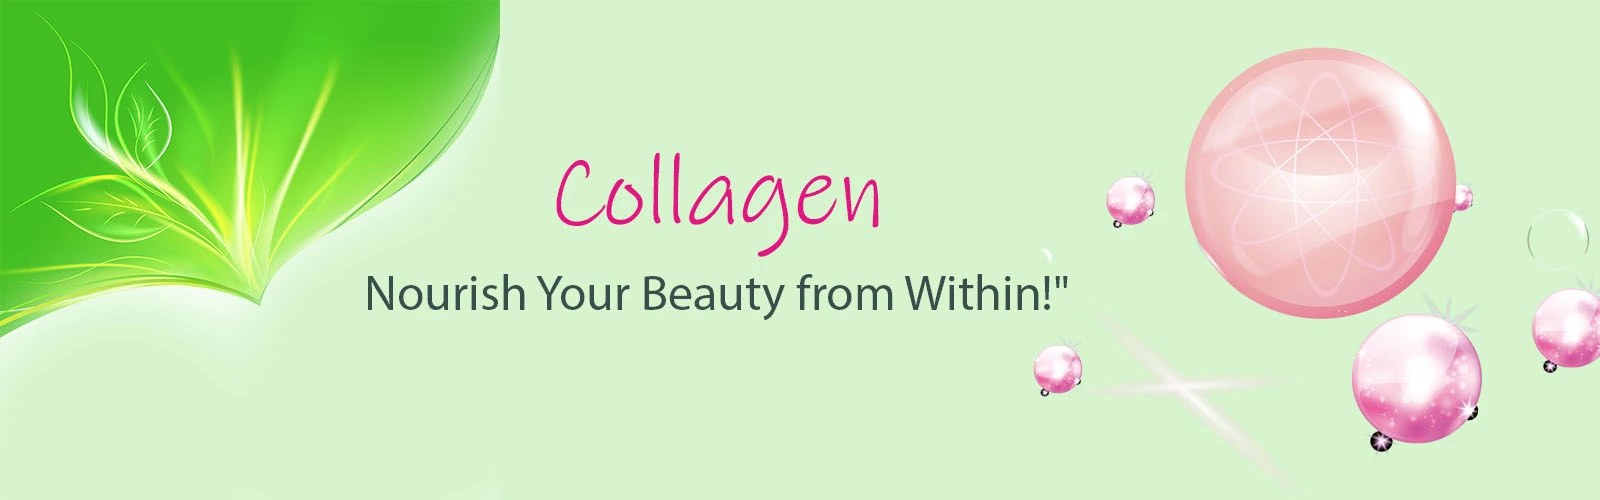 Benefits of Collagen for Skin - Herbicosbeauty